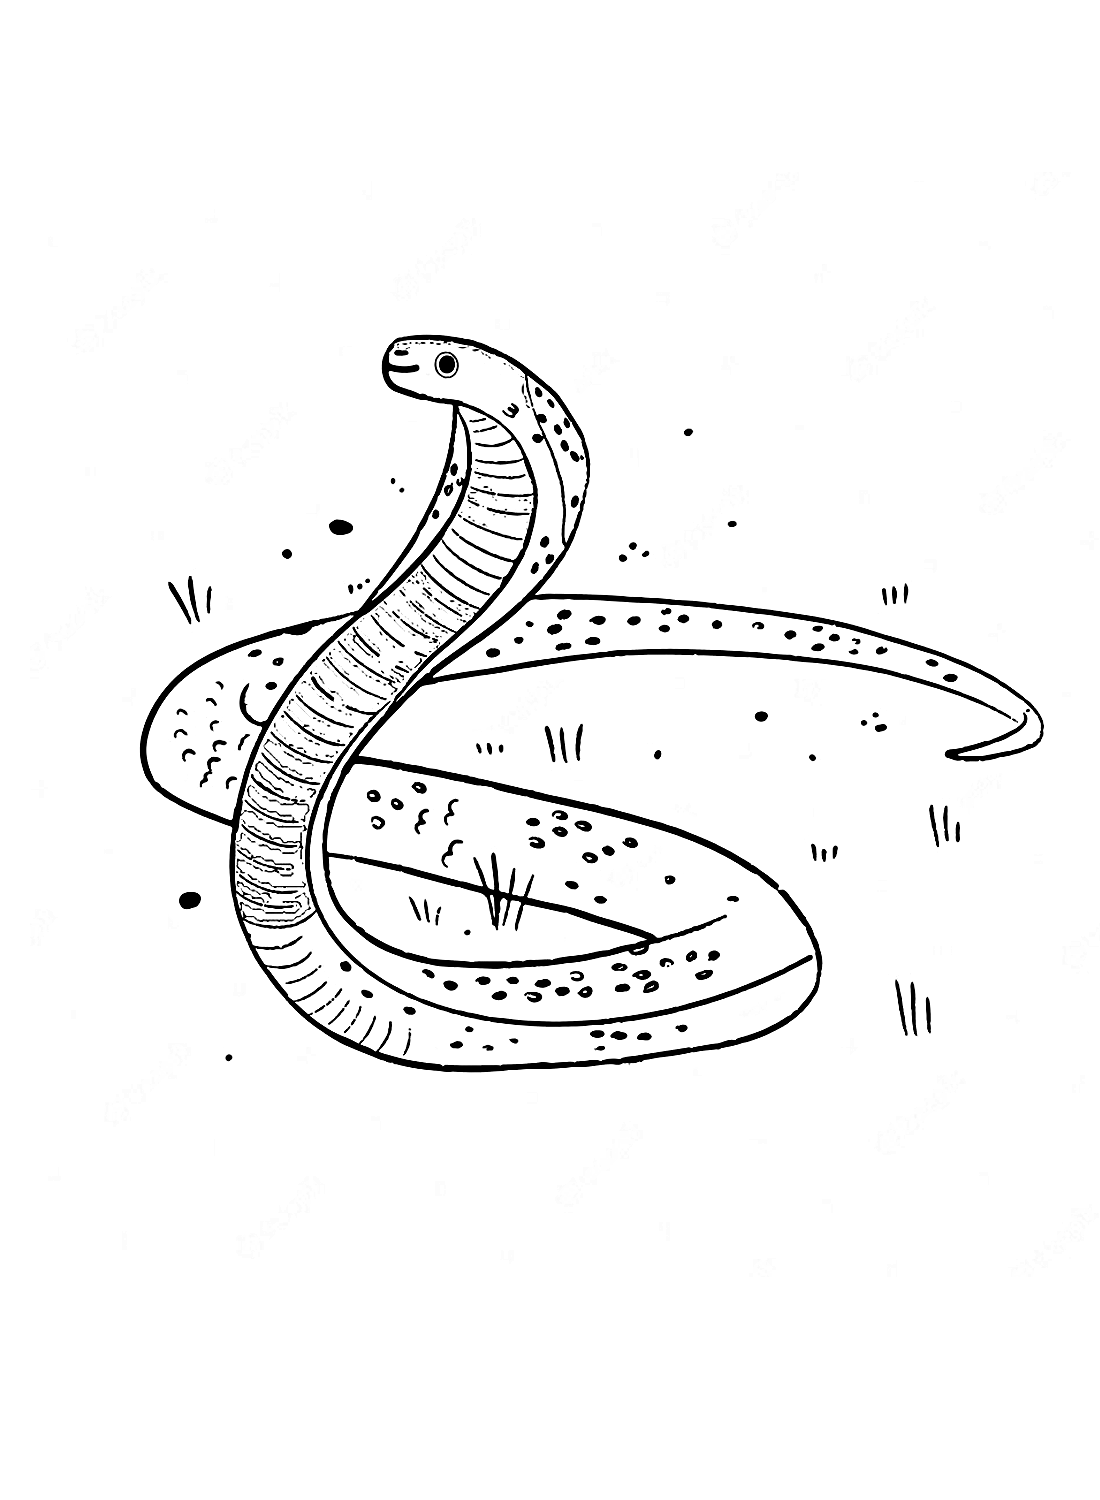 A Cobra Simples de Cobra